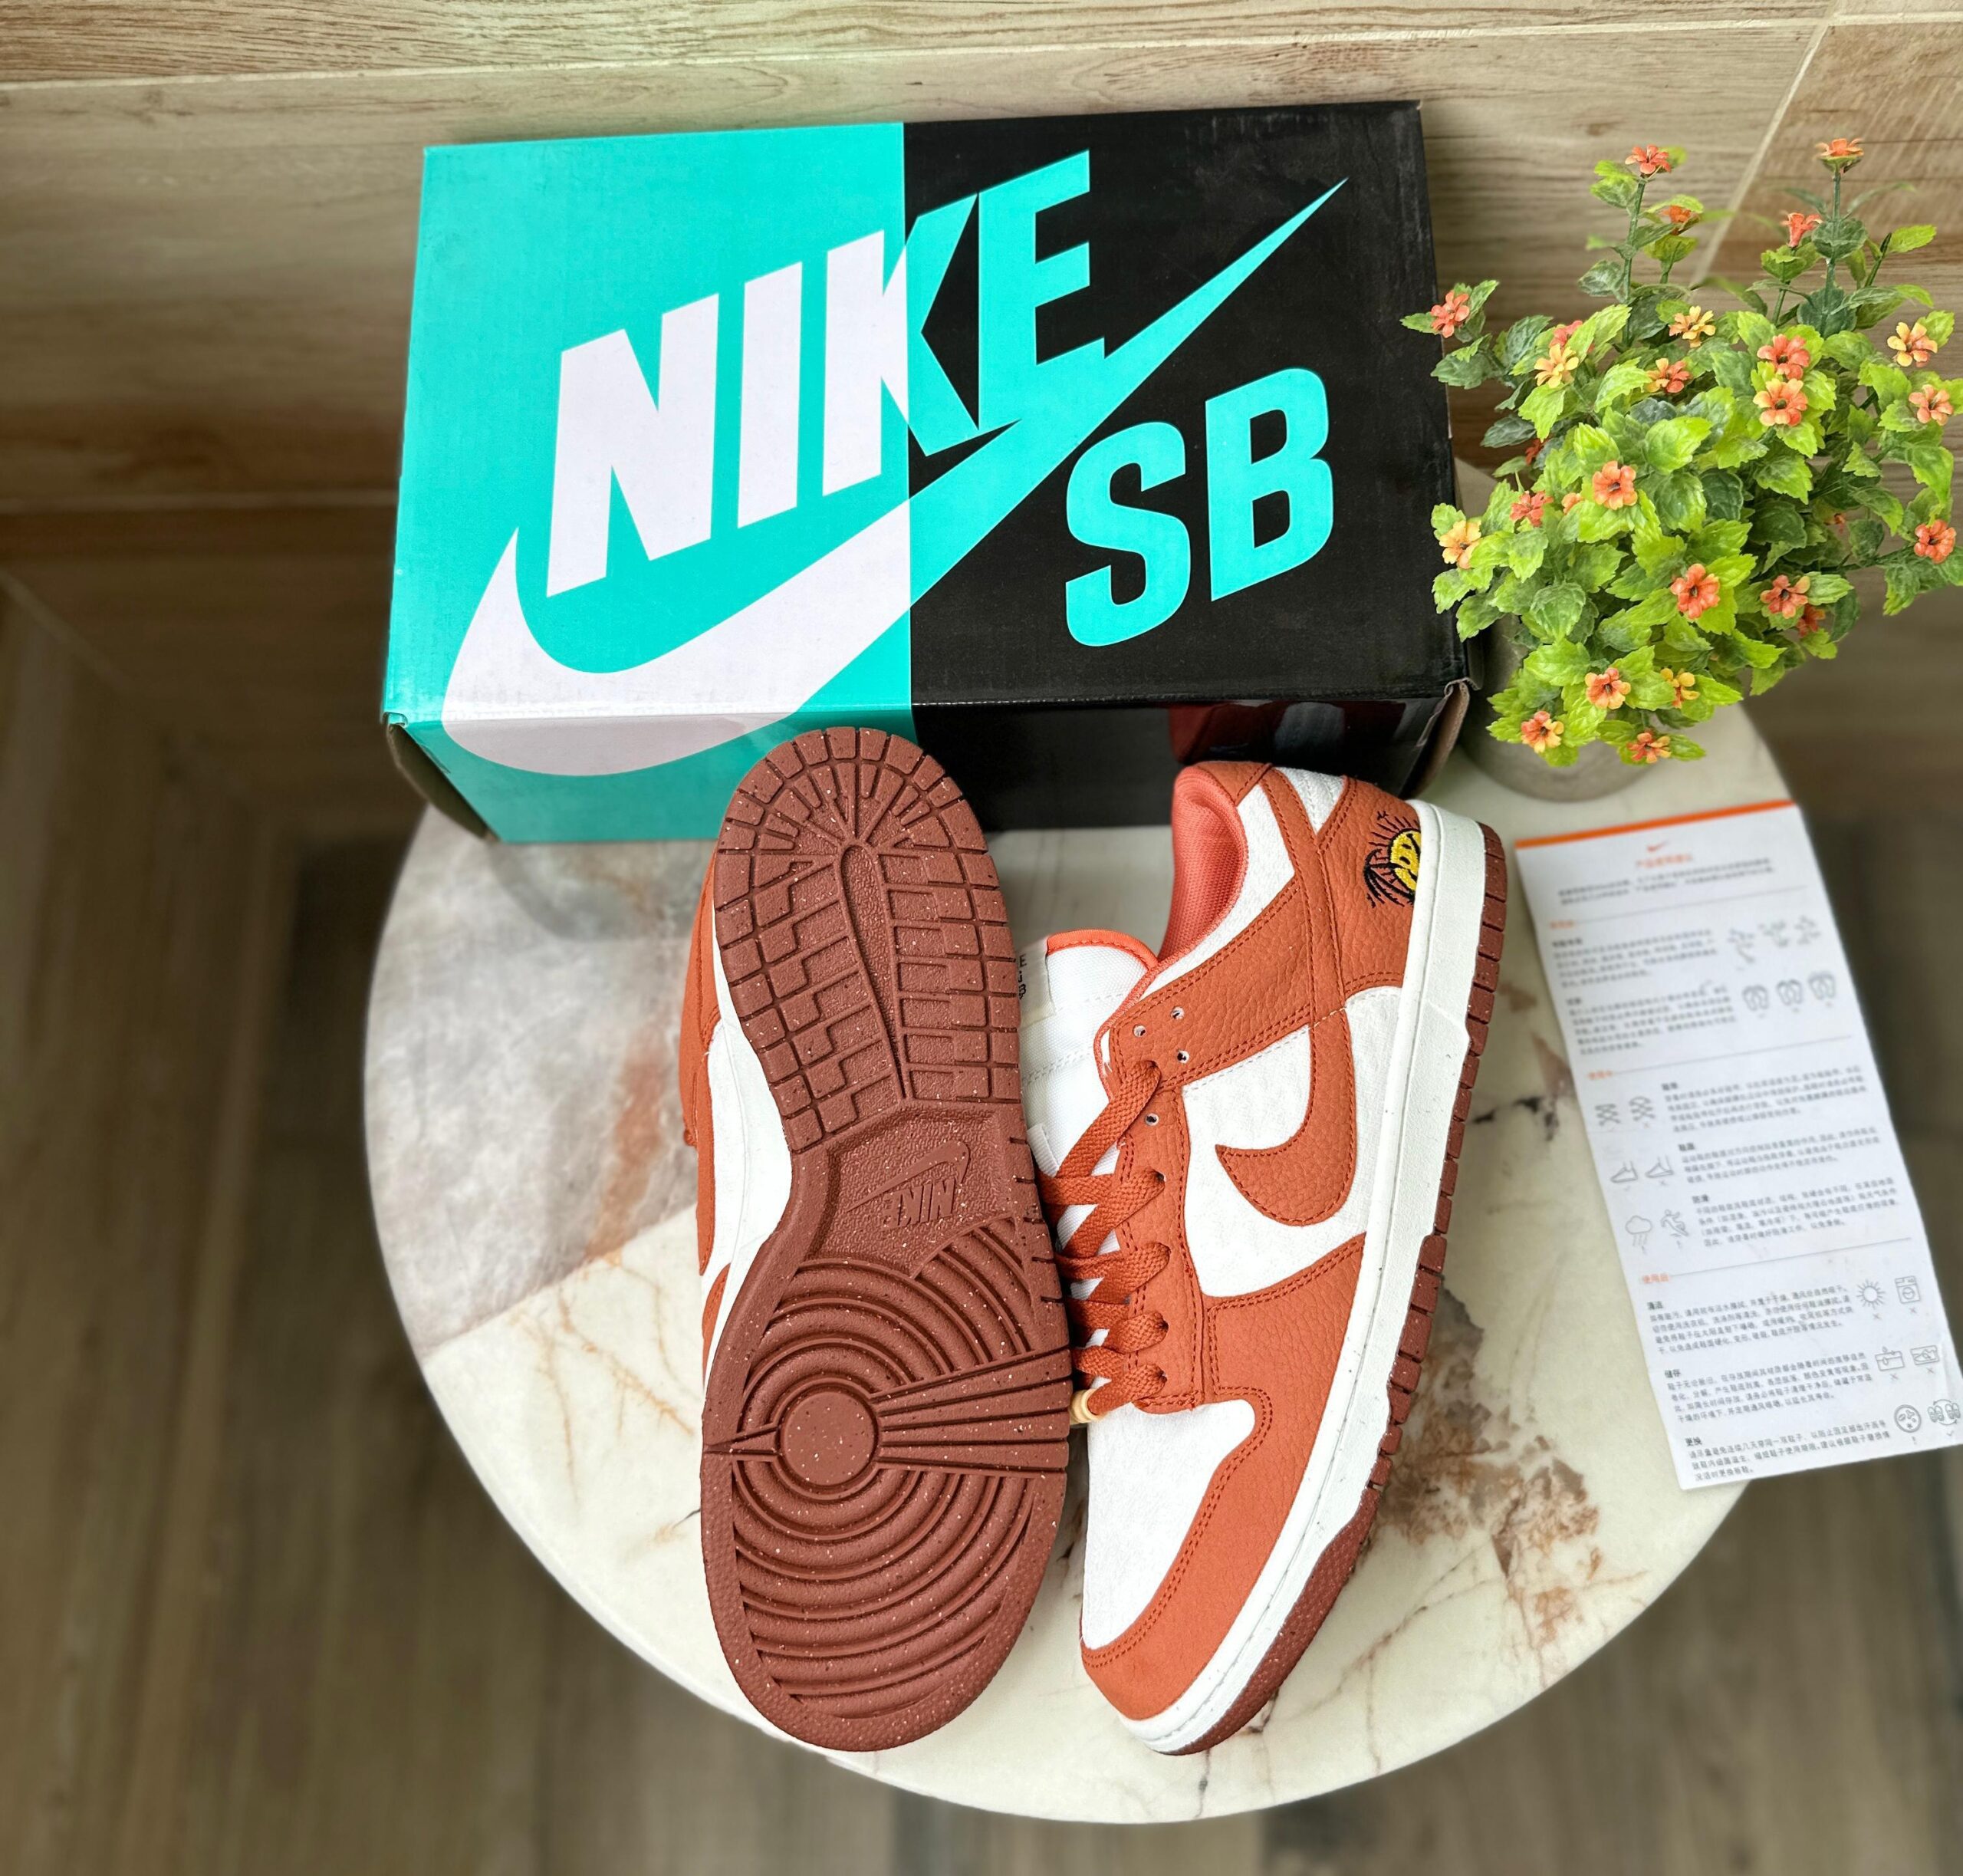 SB Dunk Sunclub Orange Shoes In Stock